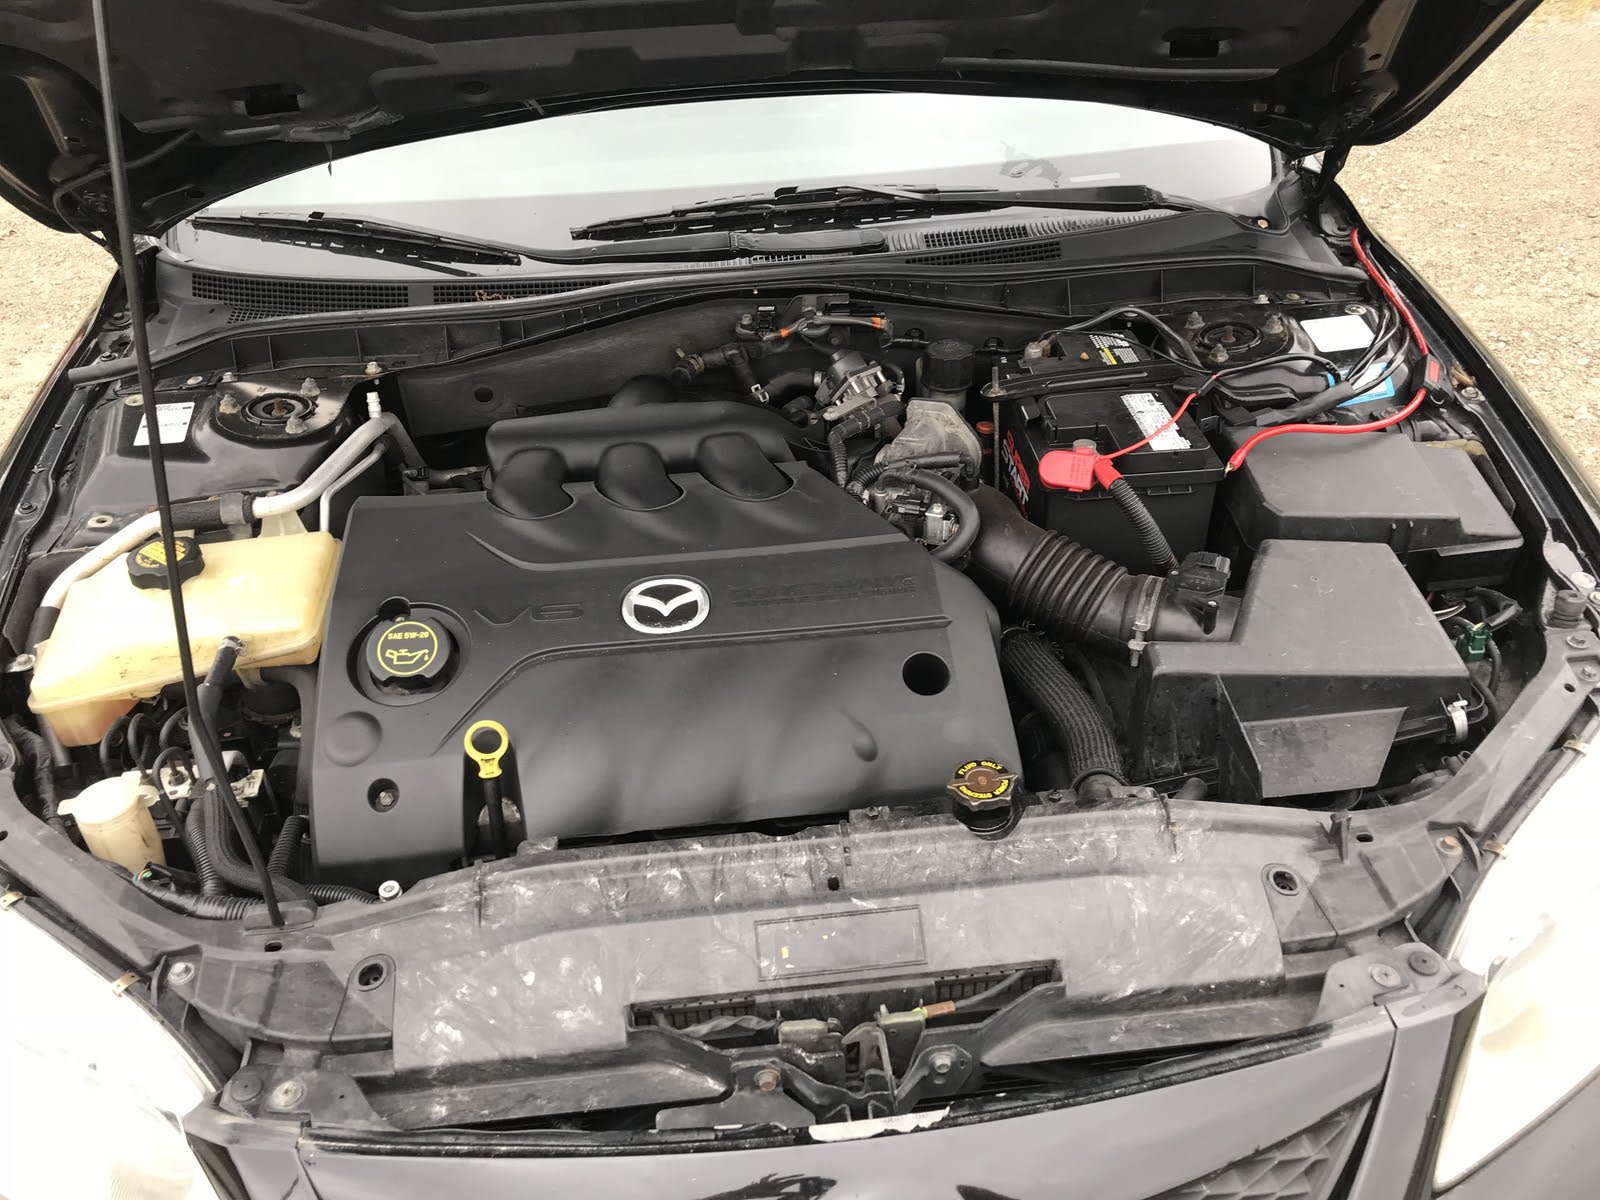 Mazda Mazda6 Questions V6 Mazda 6 Engine Swap Cargurus